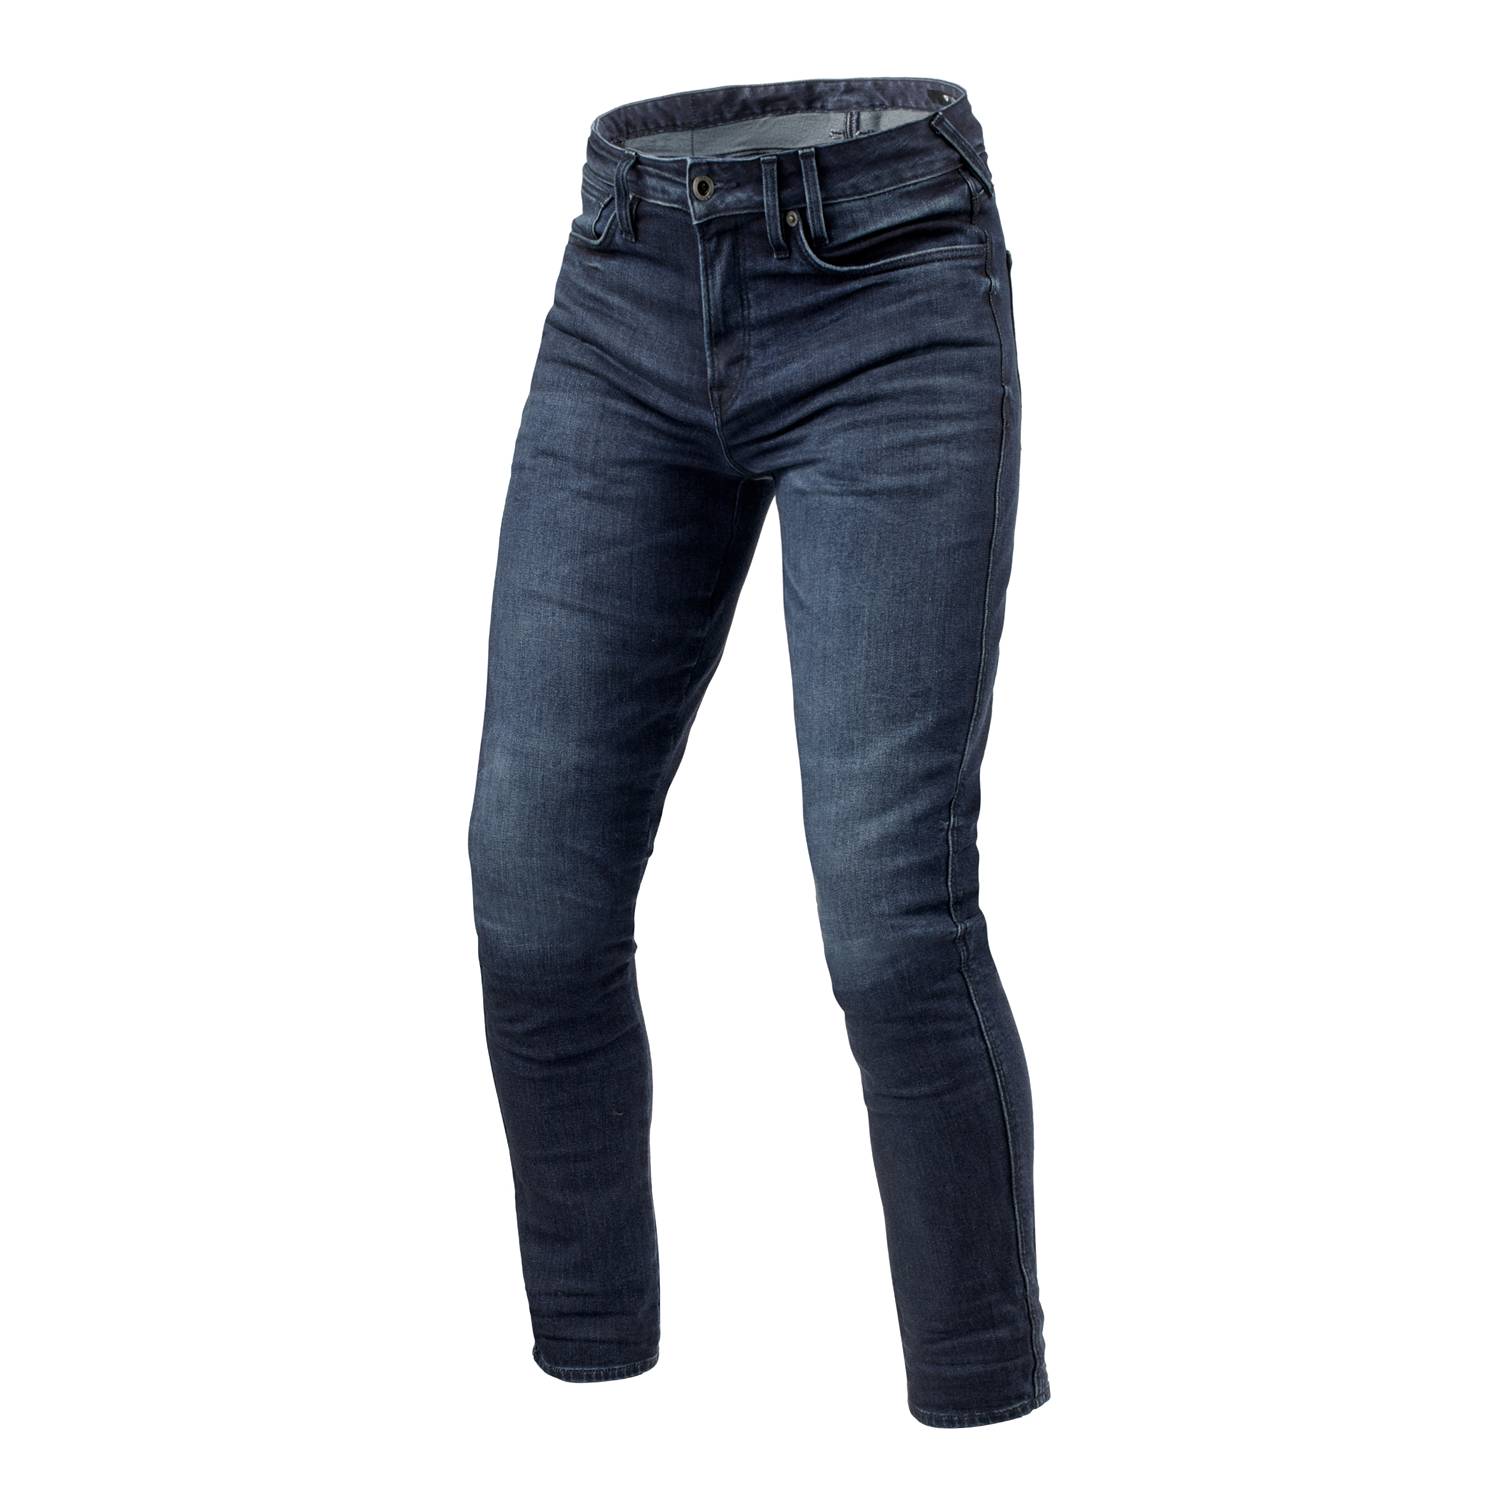 Image of REV'IT! Jeans Carlin SK Dark Blue Used L34 Motorcycle Jeans Talla L34/W30